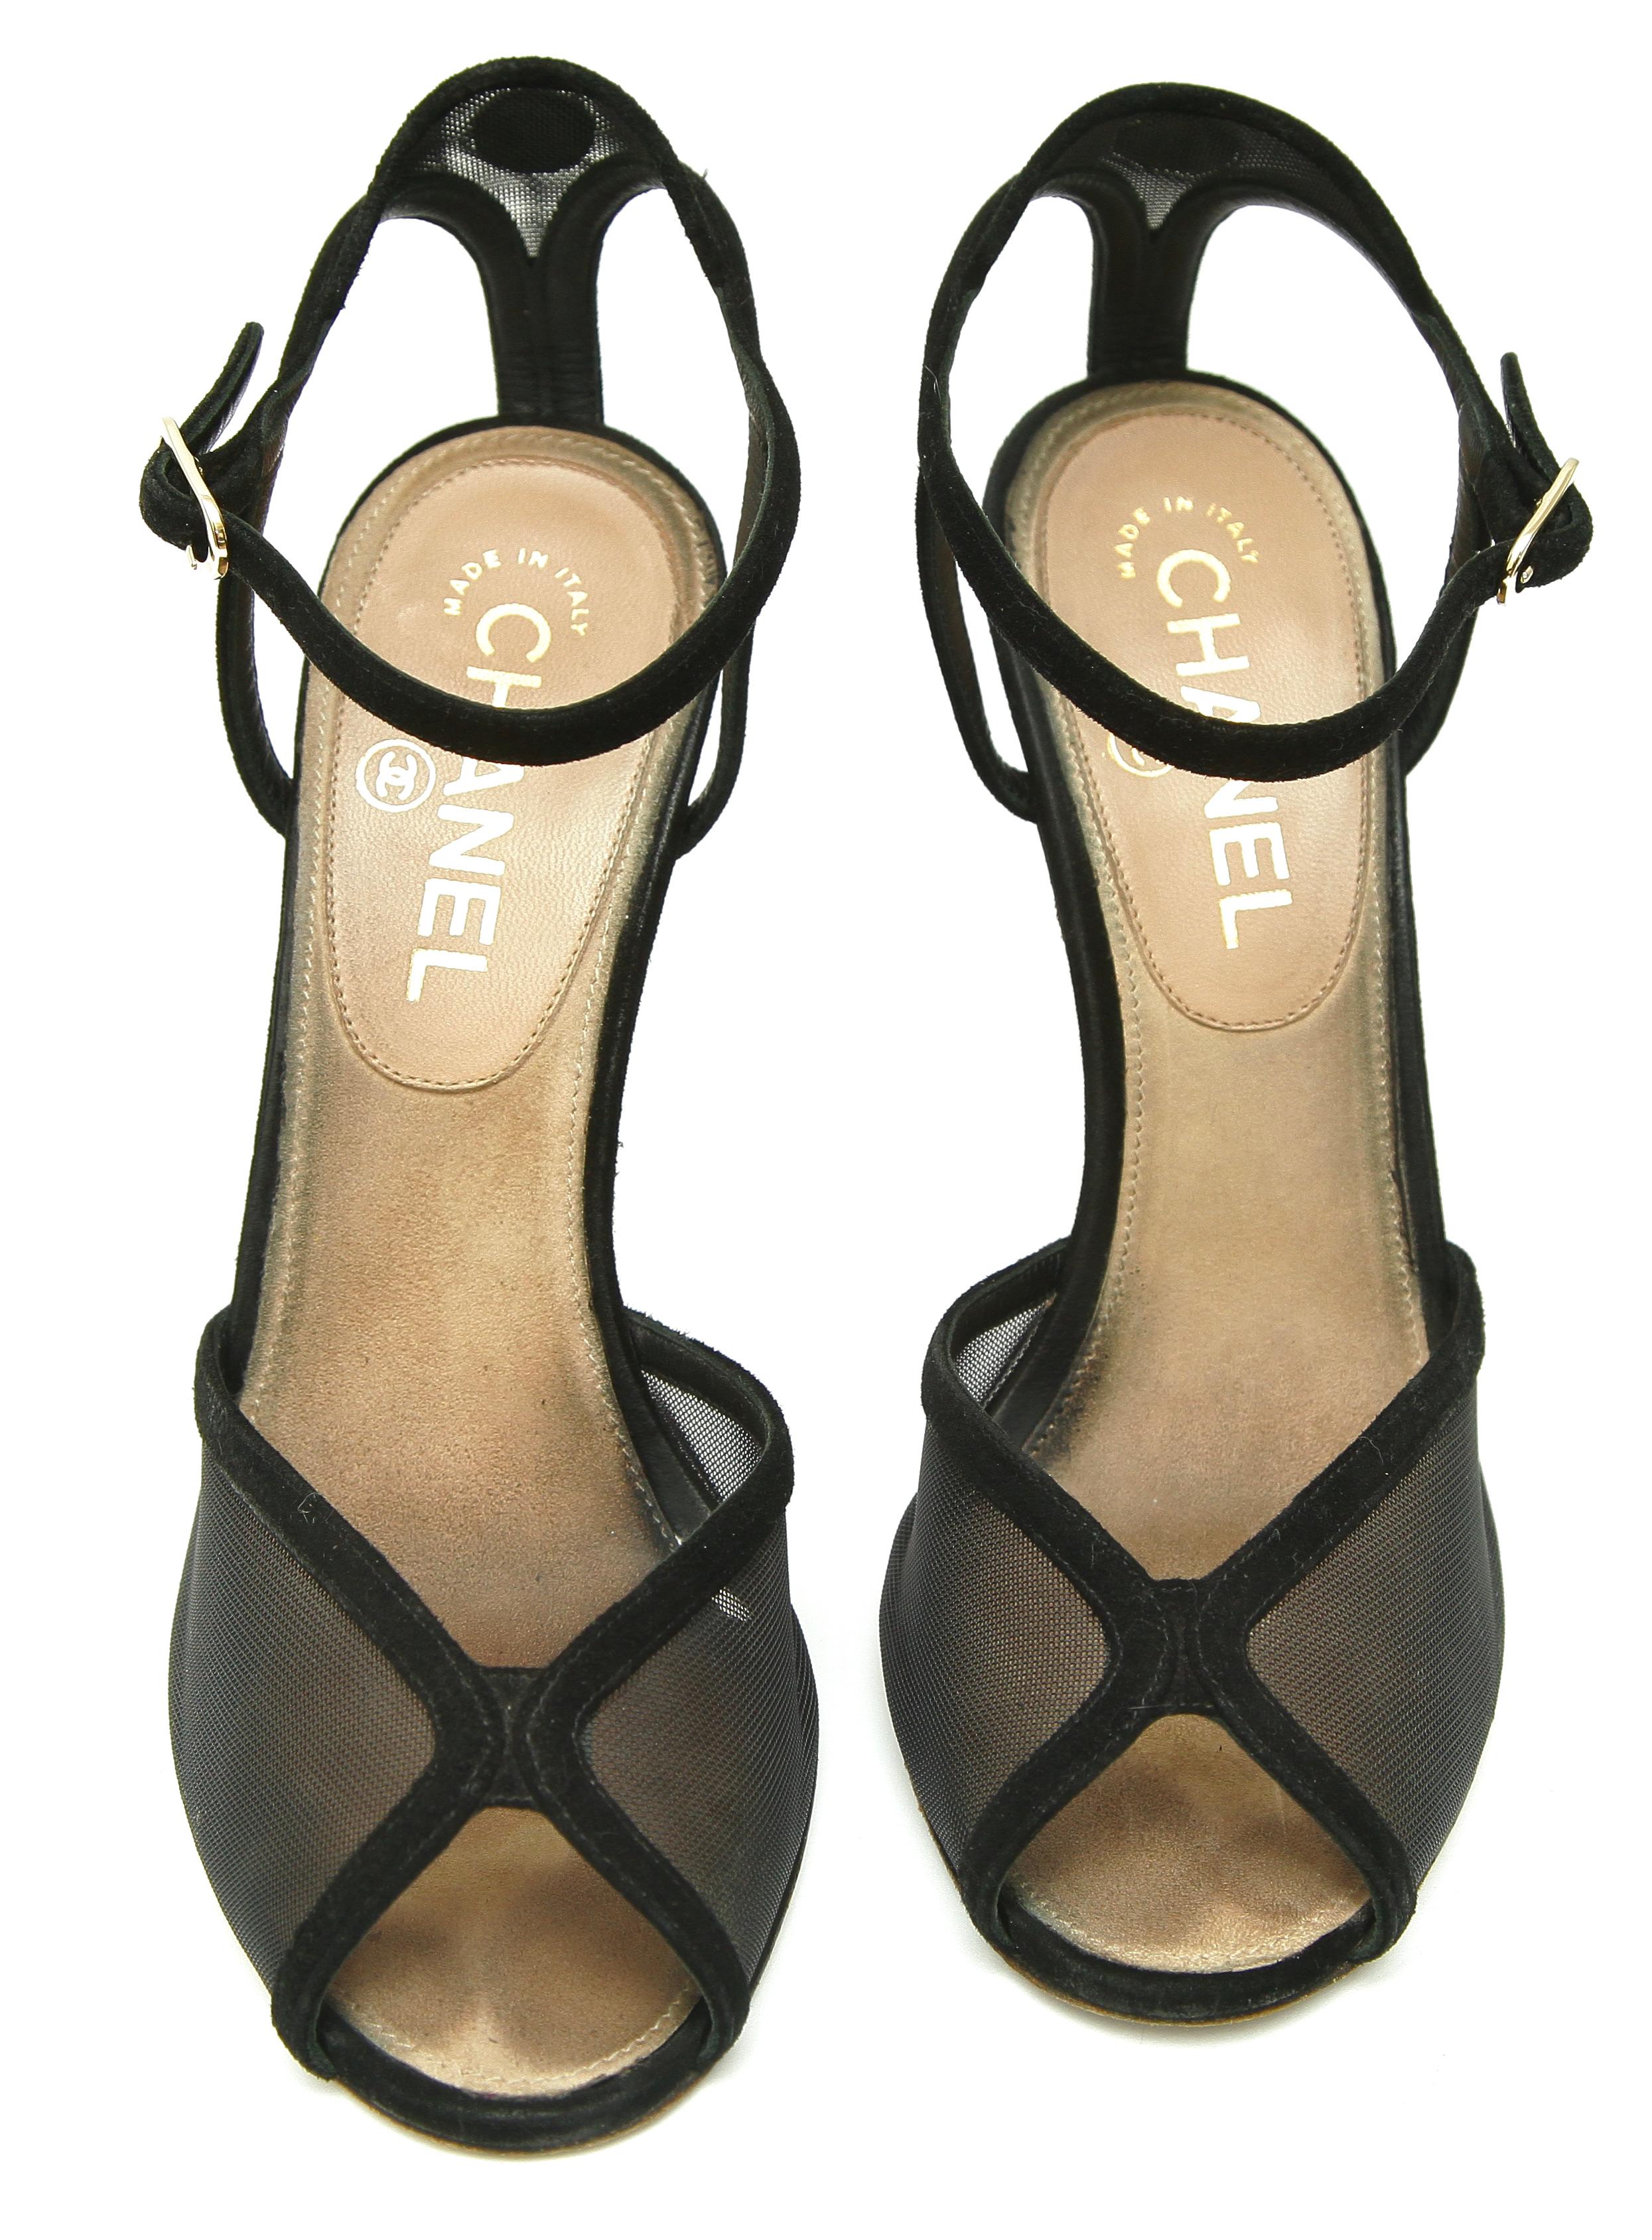 CHANEL Black Suede Sandals Heels Pump Lucite Ankle Strap Gold HW Peep Toe Sz 38 For Sale 1